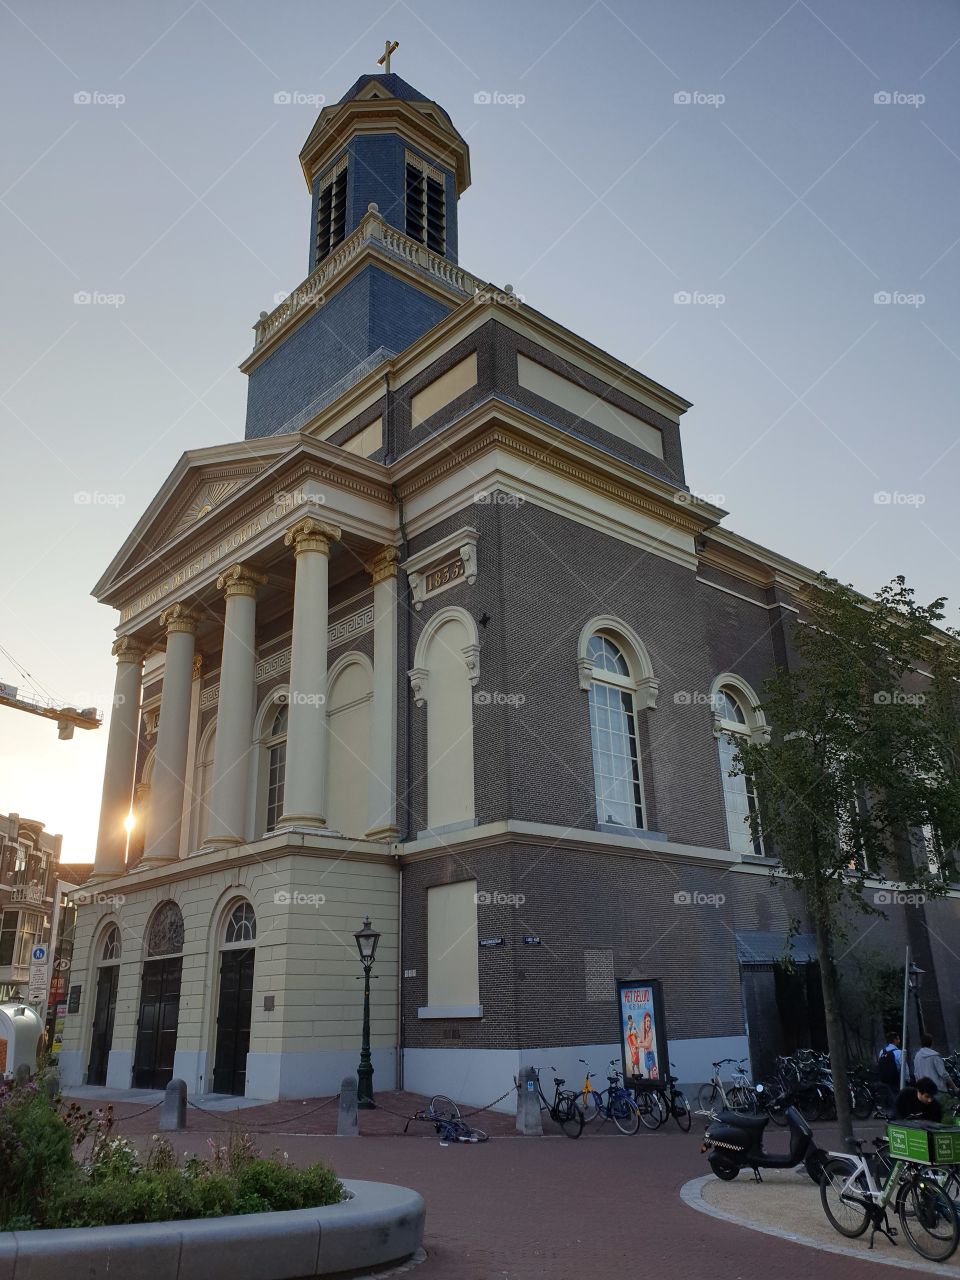 Hartebrugkerk Leiden Netherlands